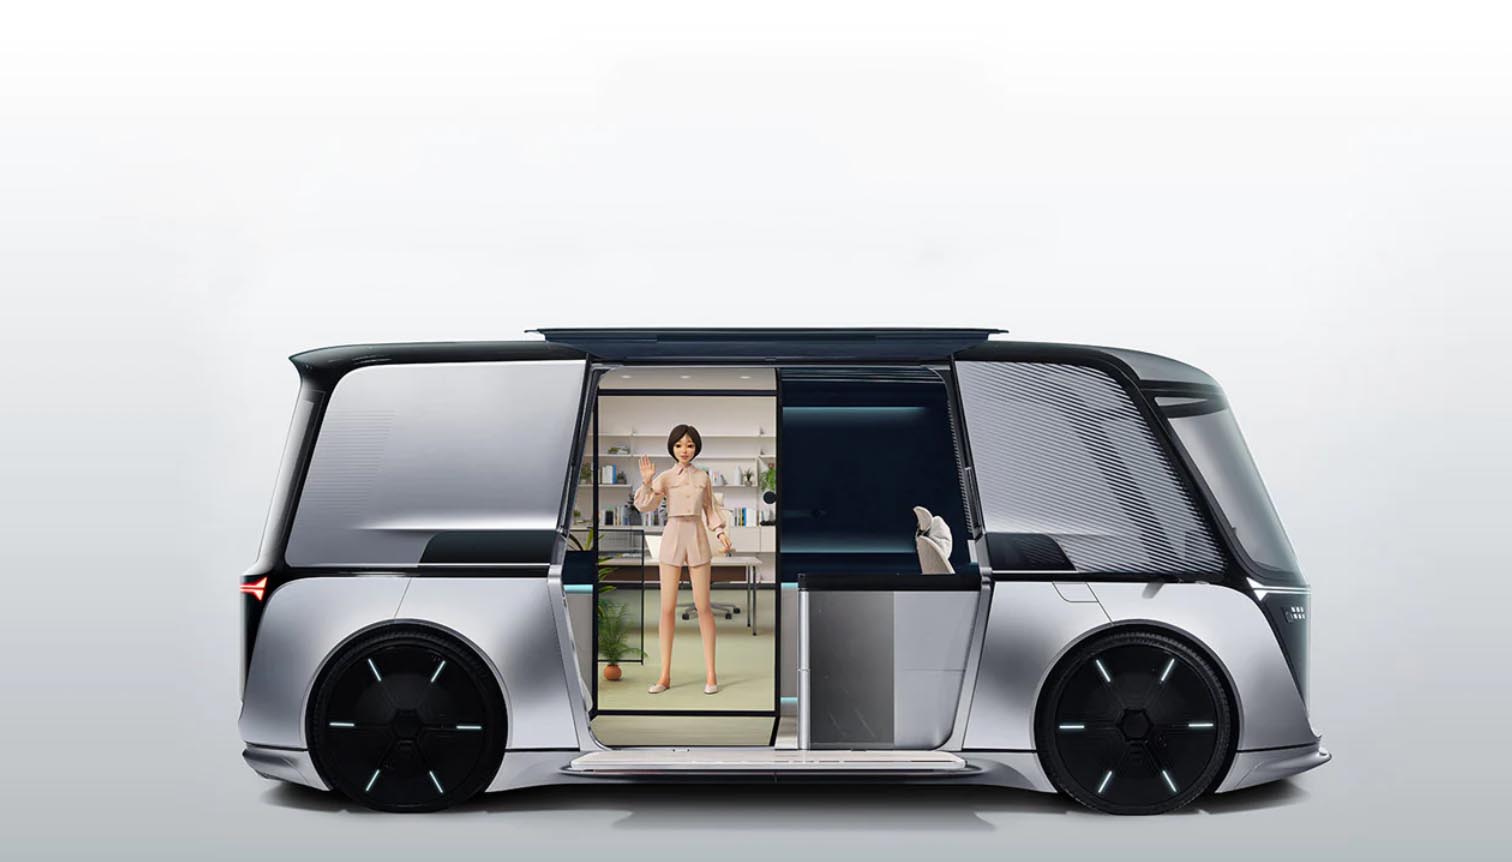 LG Omnipod - LG Omnipod futuristic pod concept revealed at CES 2022